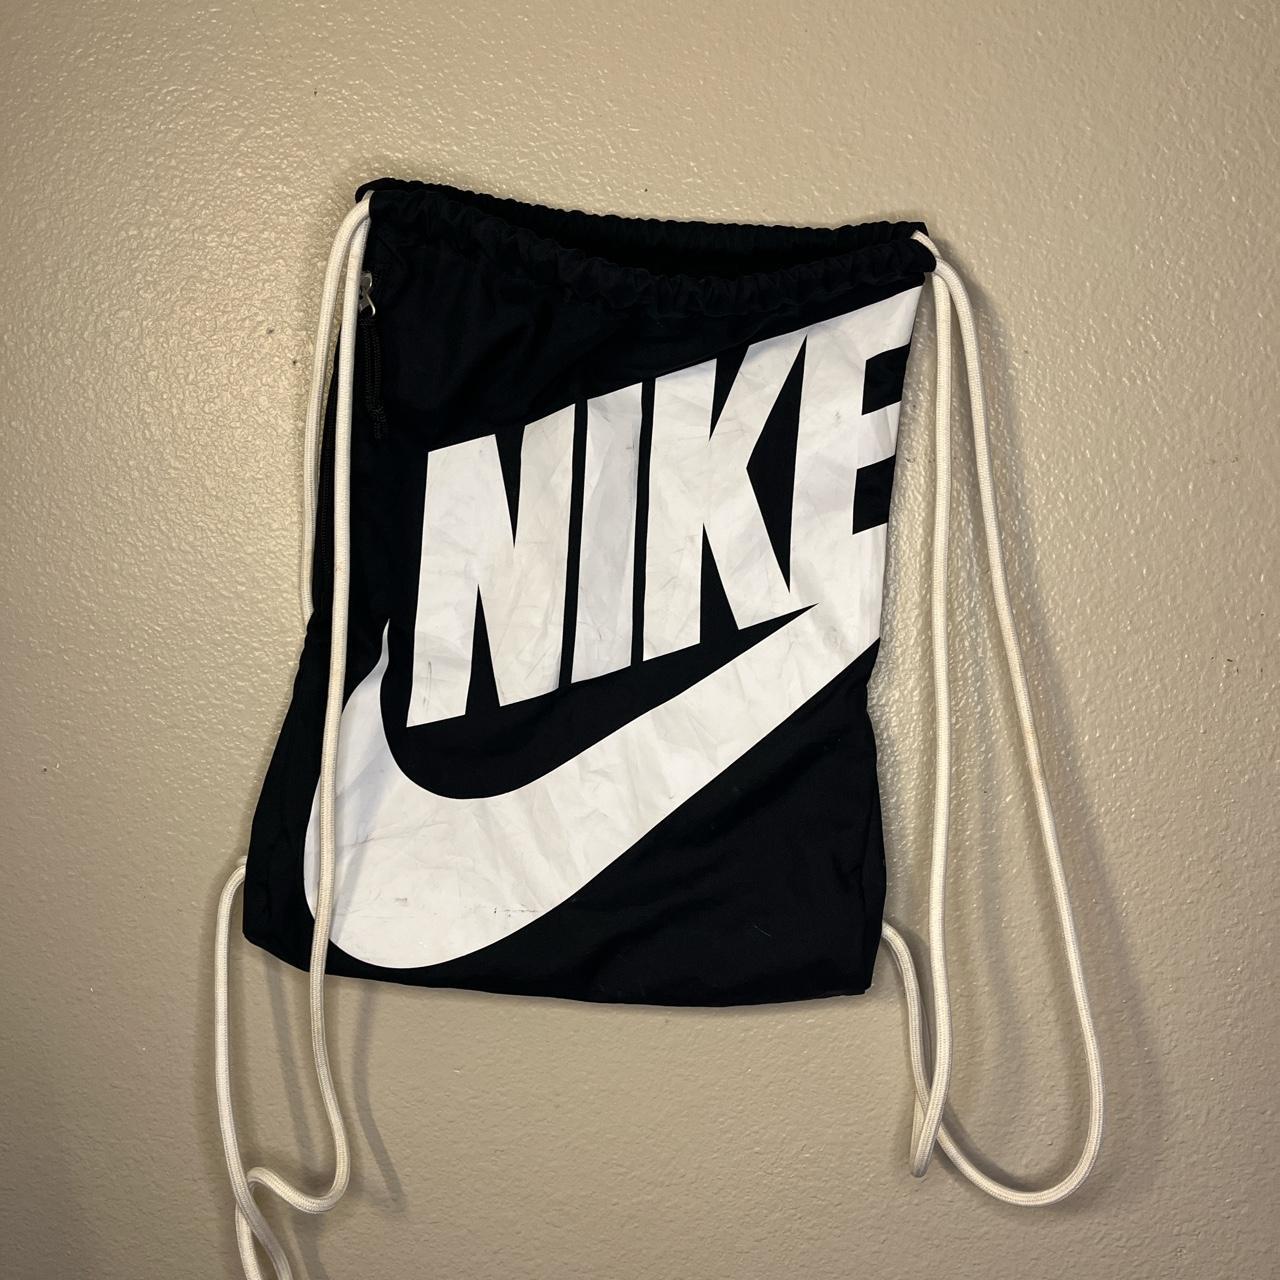 Nike string bag - Depop